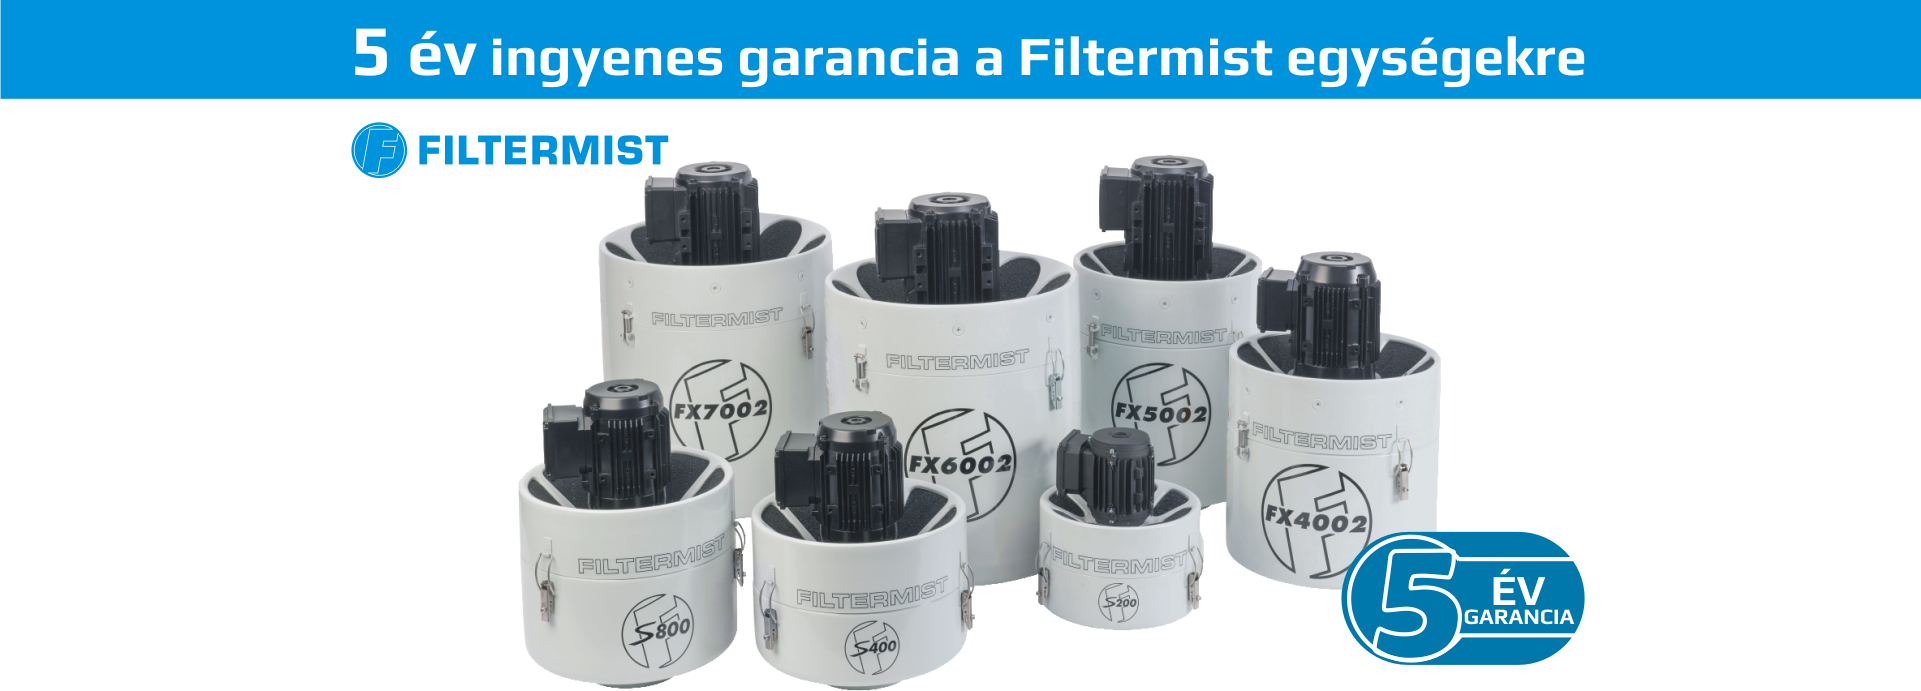 Filtermist 5 év garancia